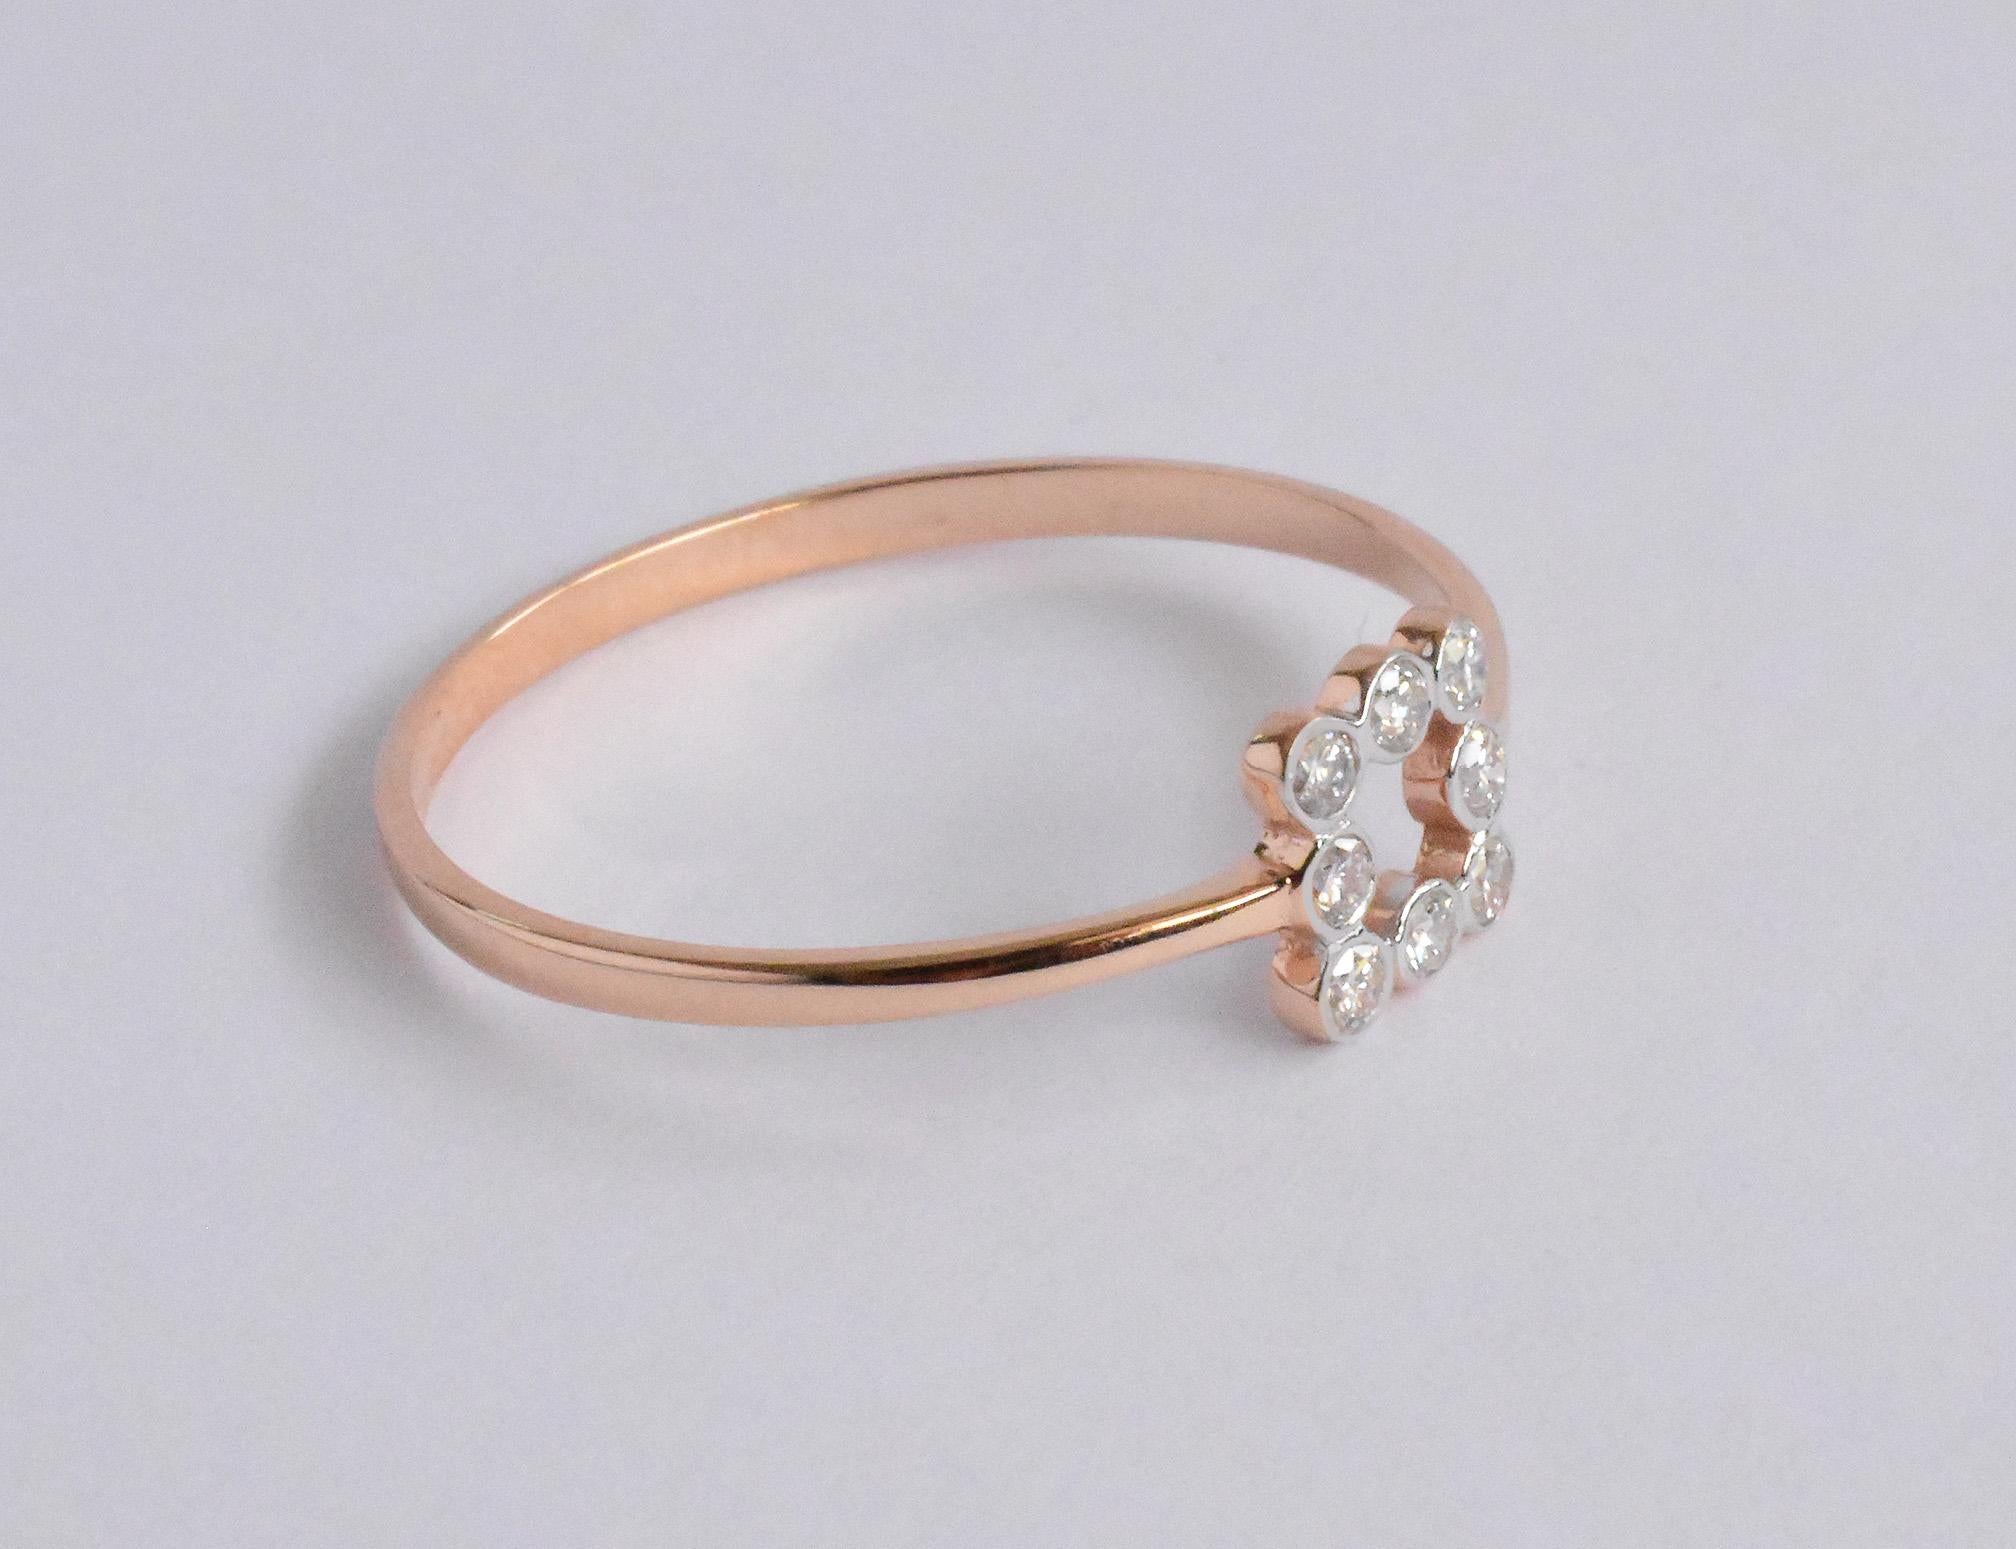 For Sale:  18k Gold Diamond Ring Bezel Set Diamond Band Ring Square Ring 8